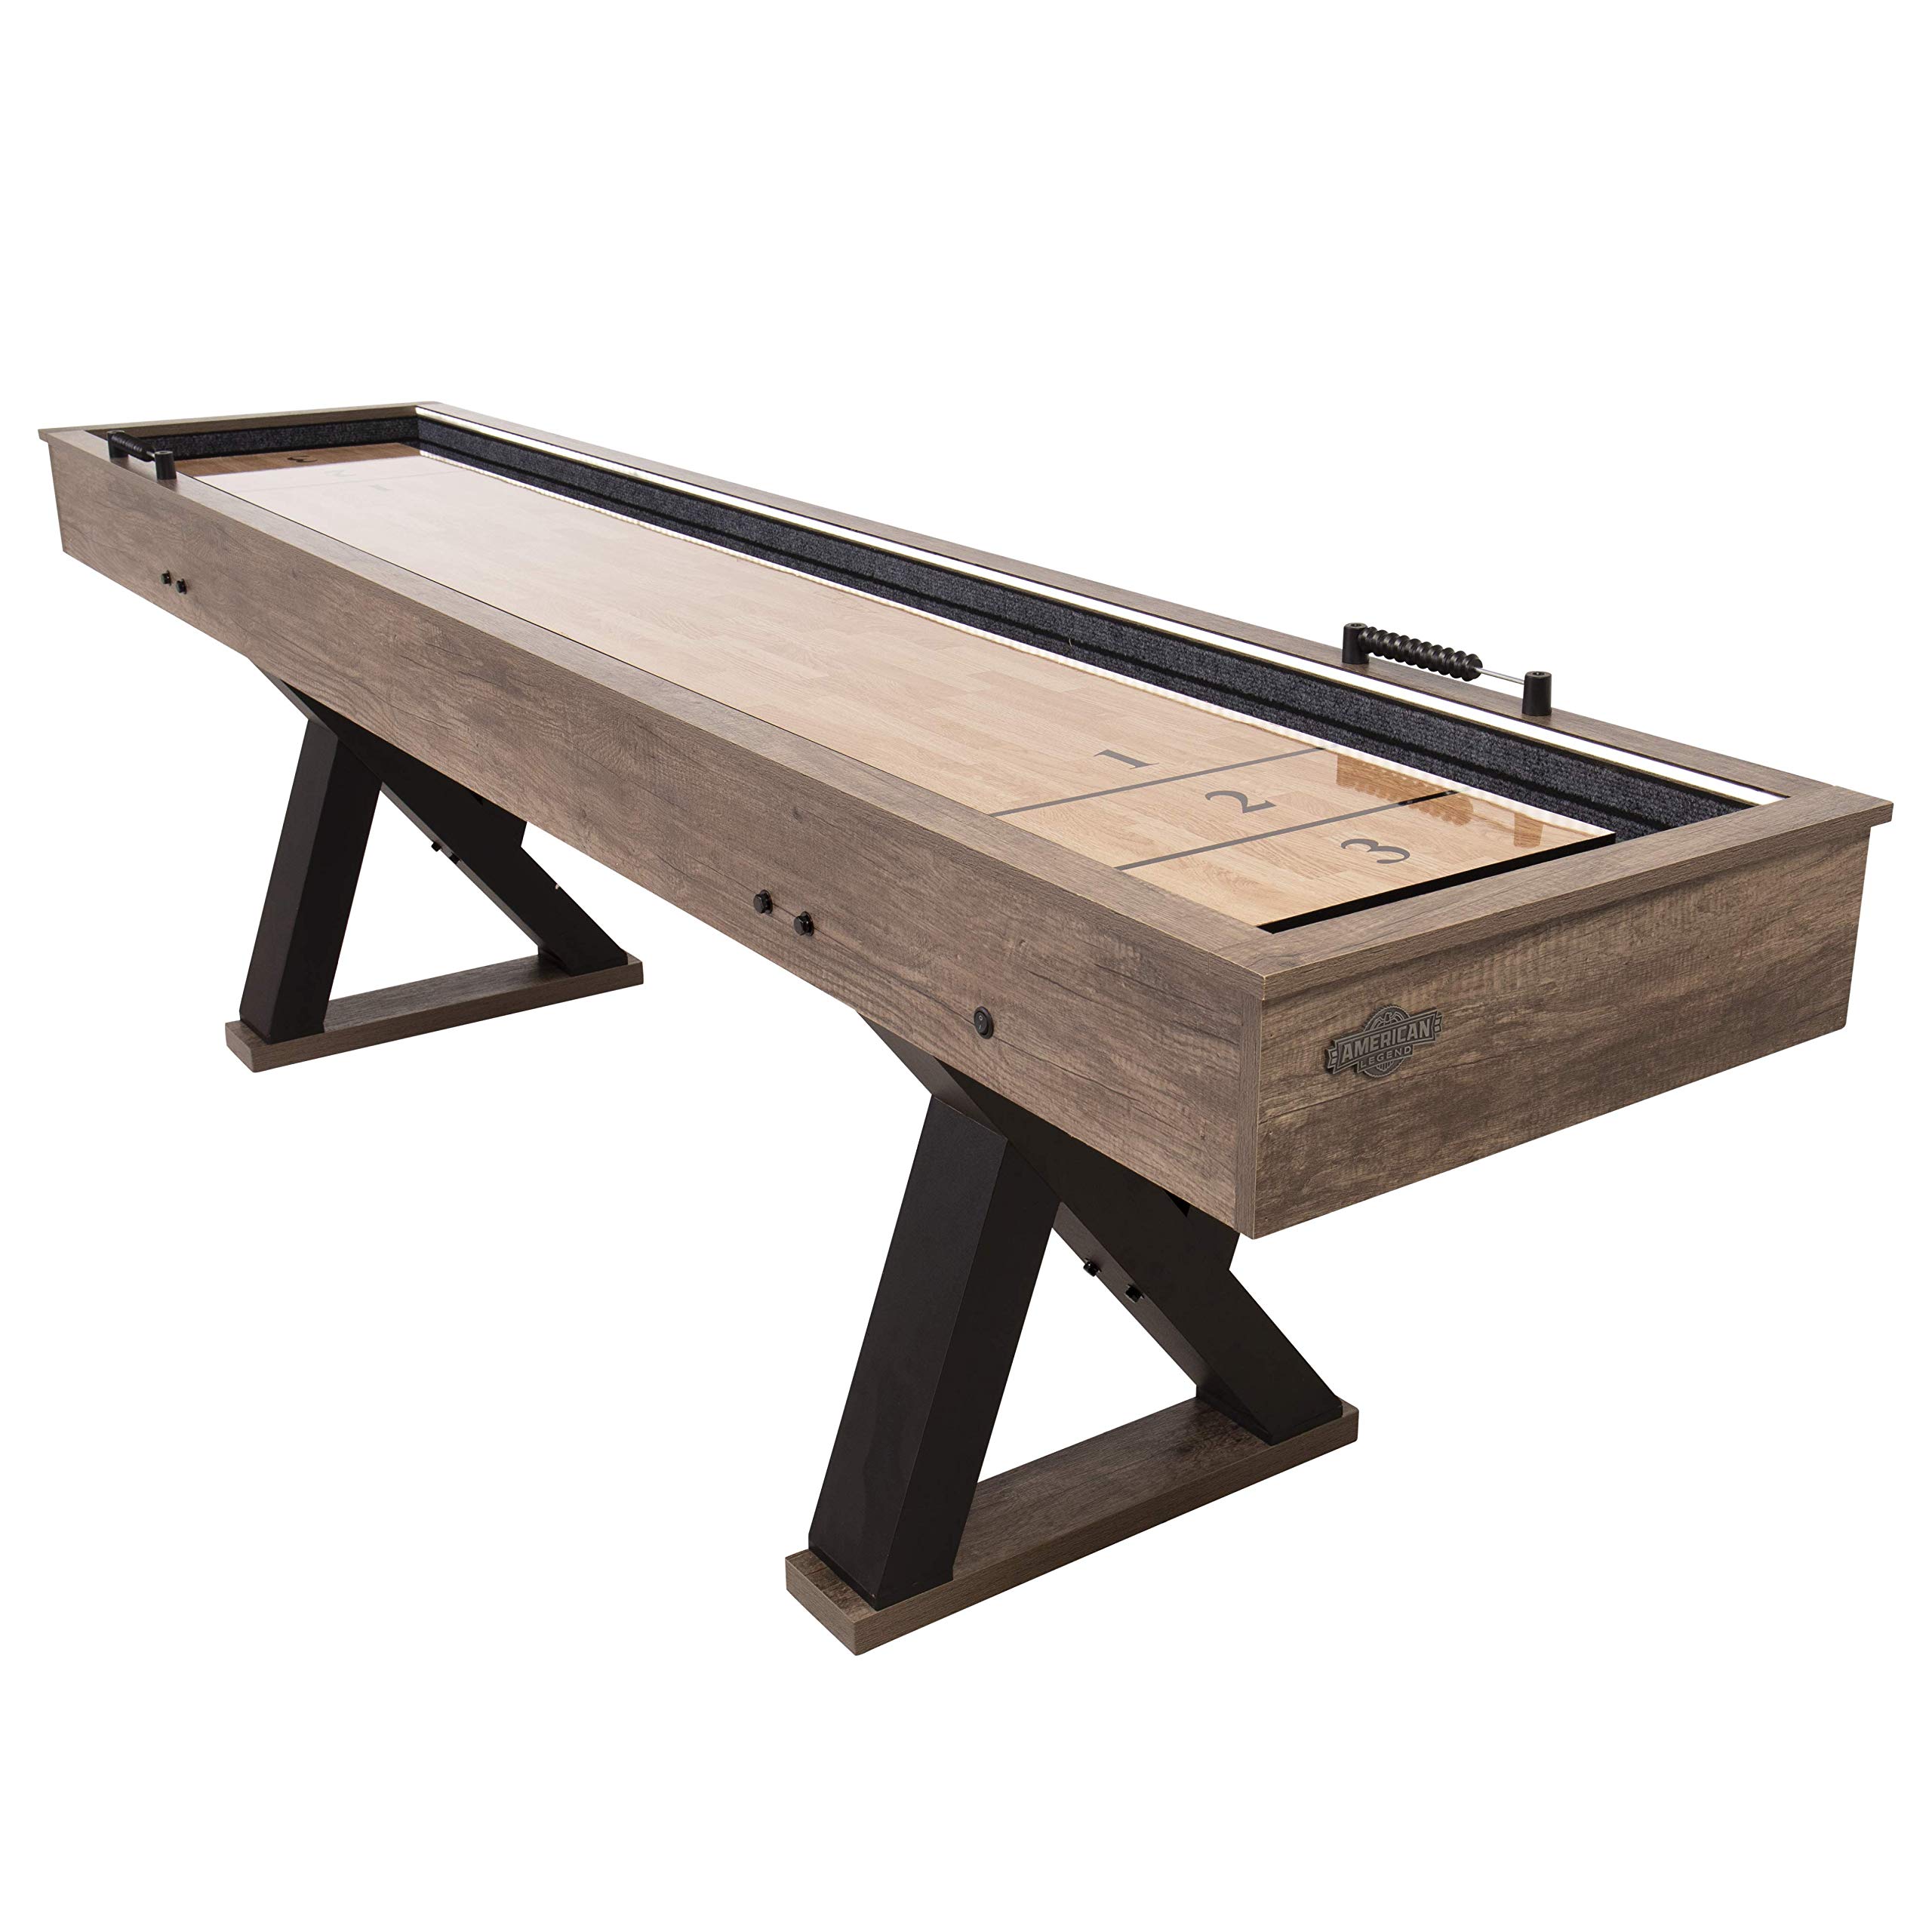 American Legend LED Light Up Shuffleboard Tables - Stonebridge and Kirkwood Models Available